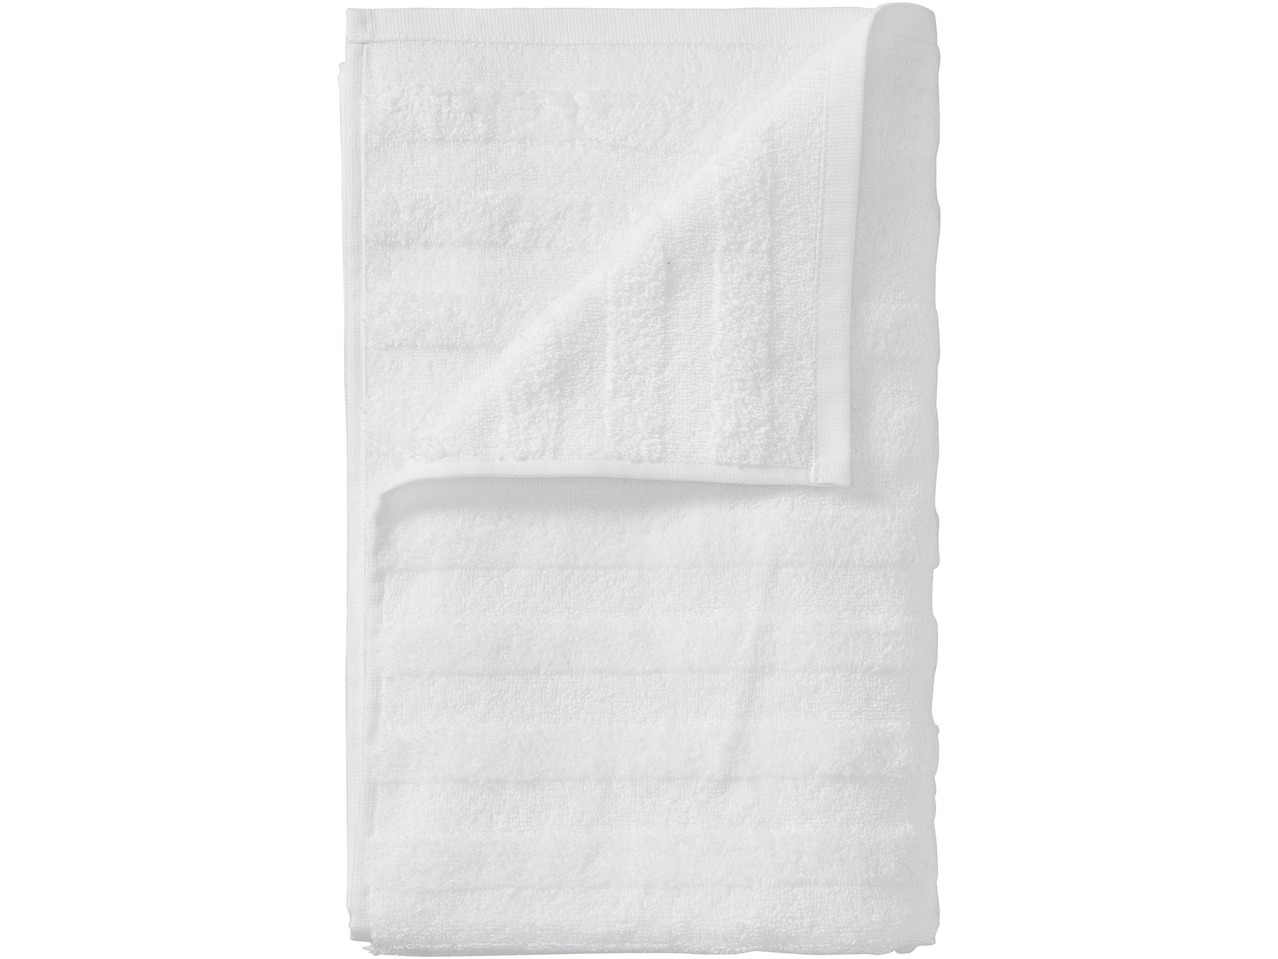 MIOMARE 2 x Hand Towels/Bath Towel